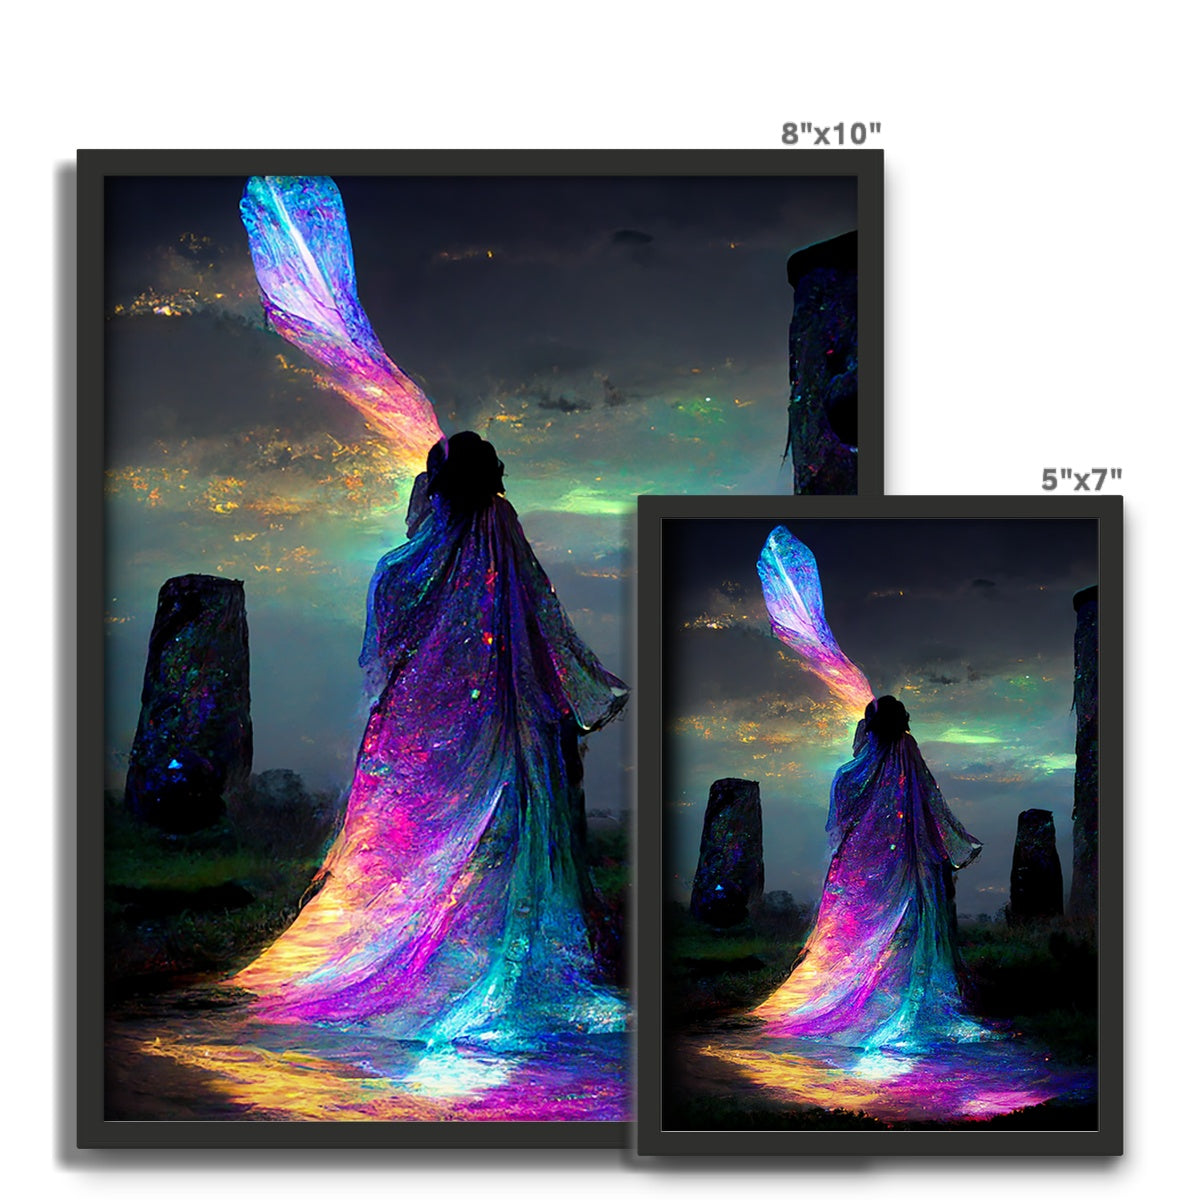 Iridescent energy fairy amongst ancient standing stones 1 Framed Photo Tile